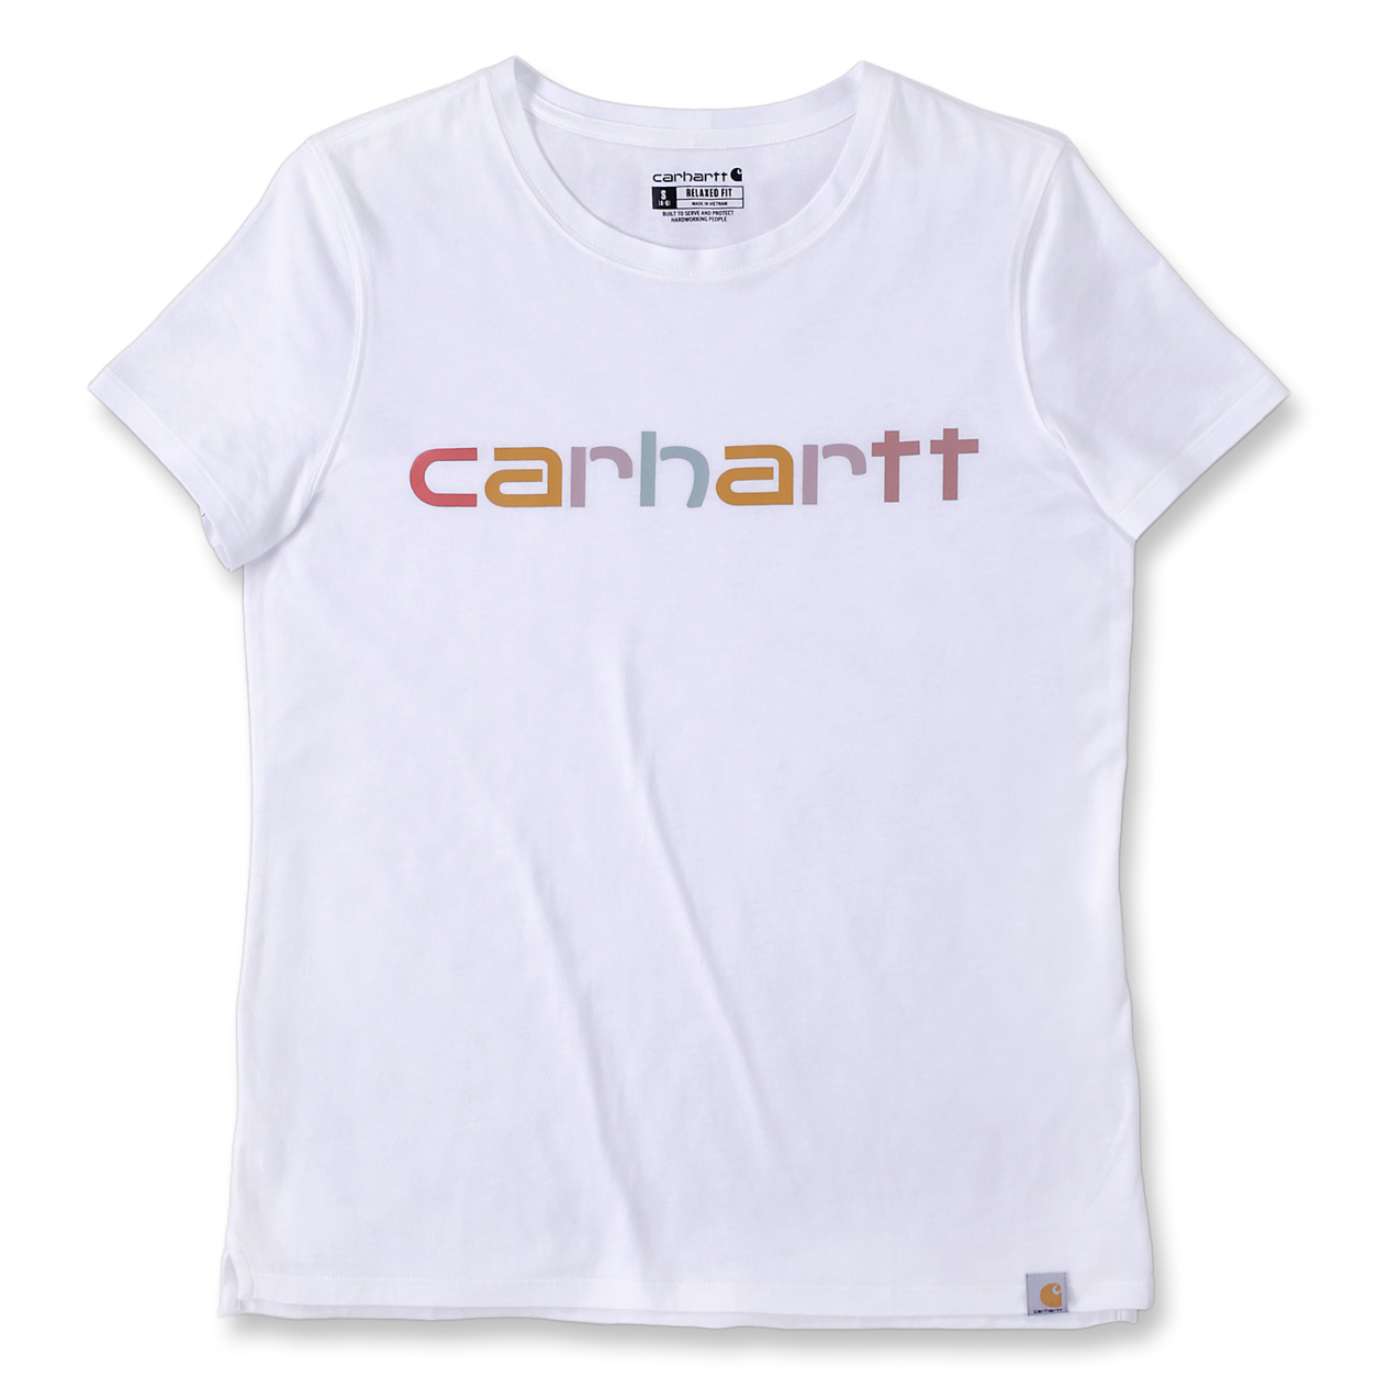 Camiseta con logo Carhartt estampado